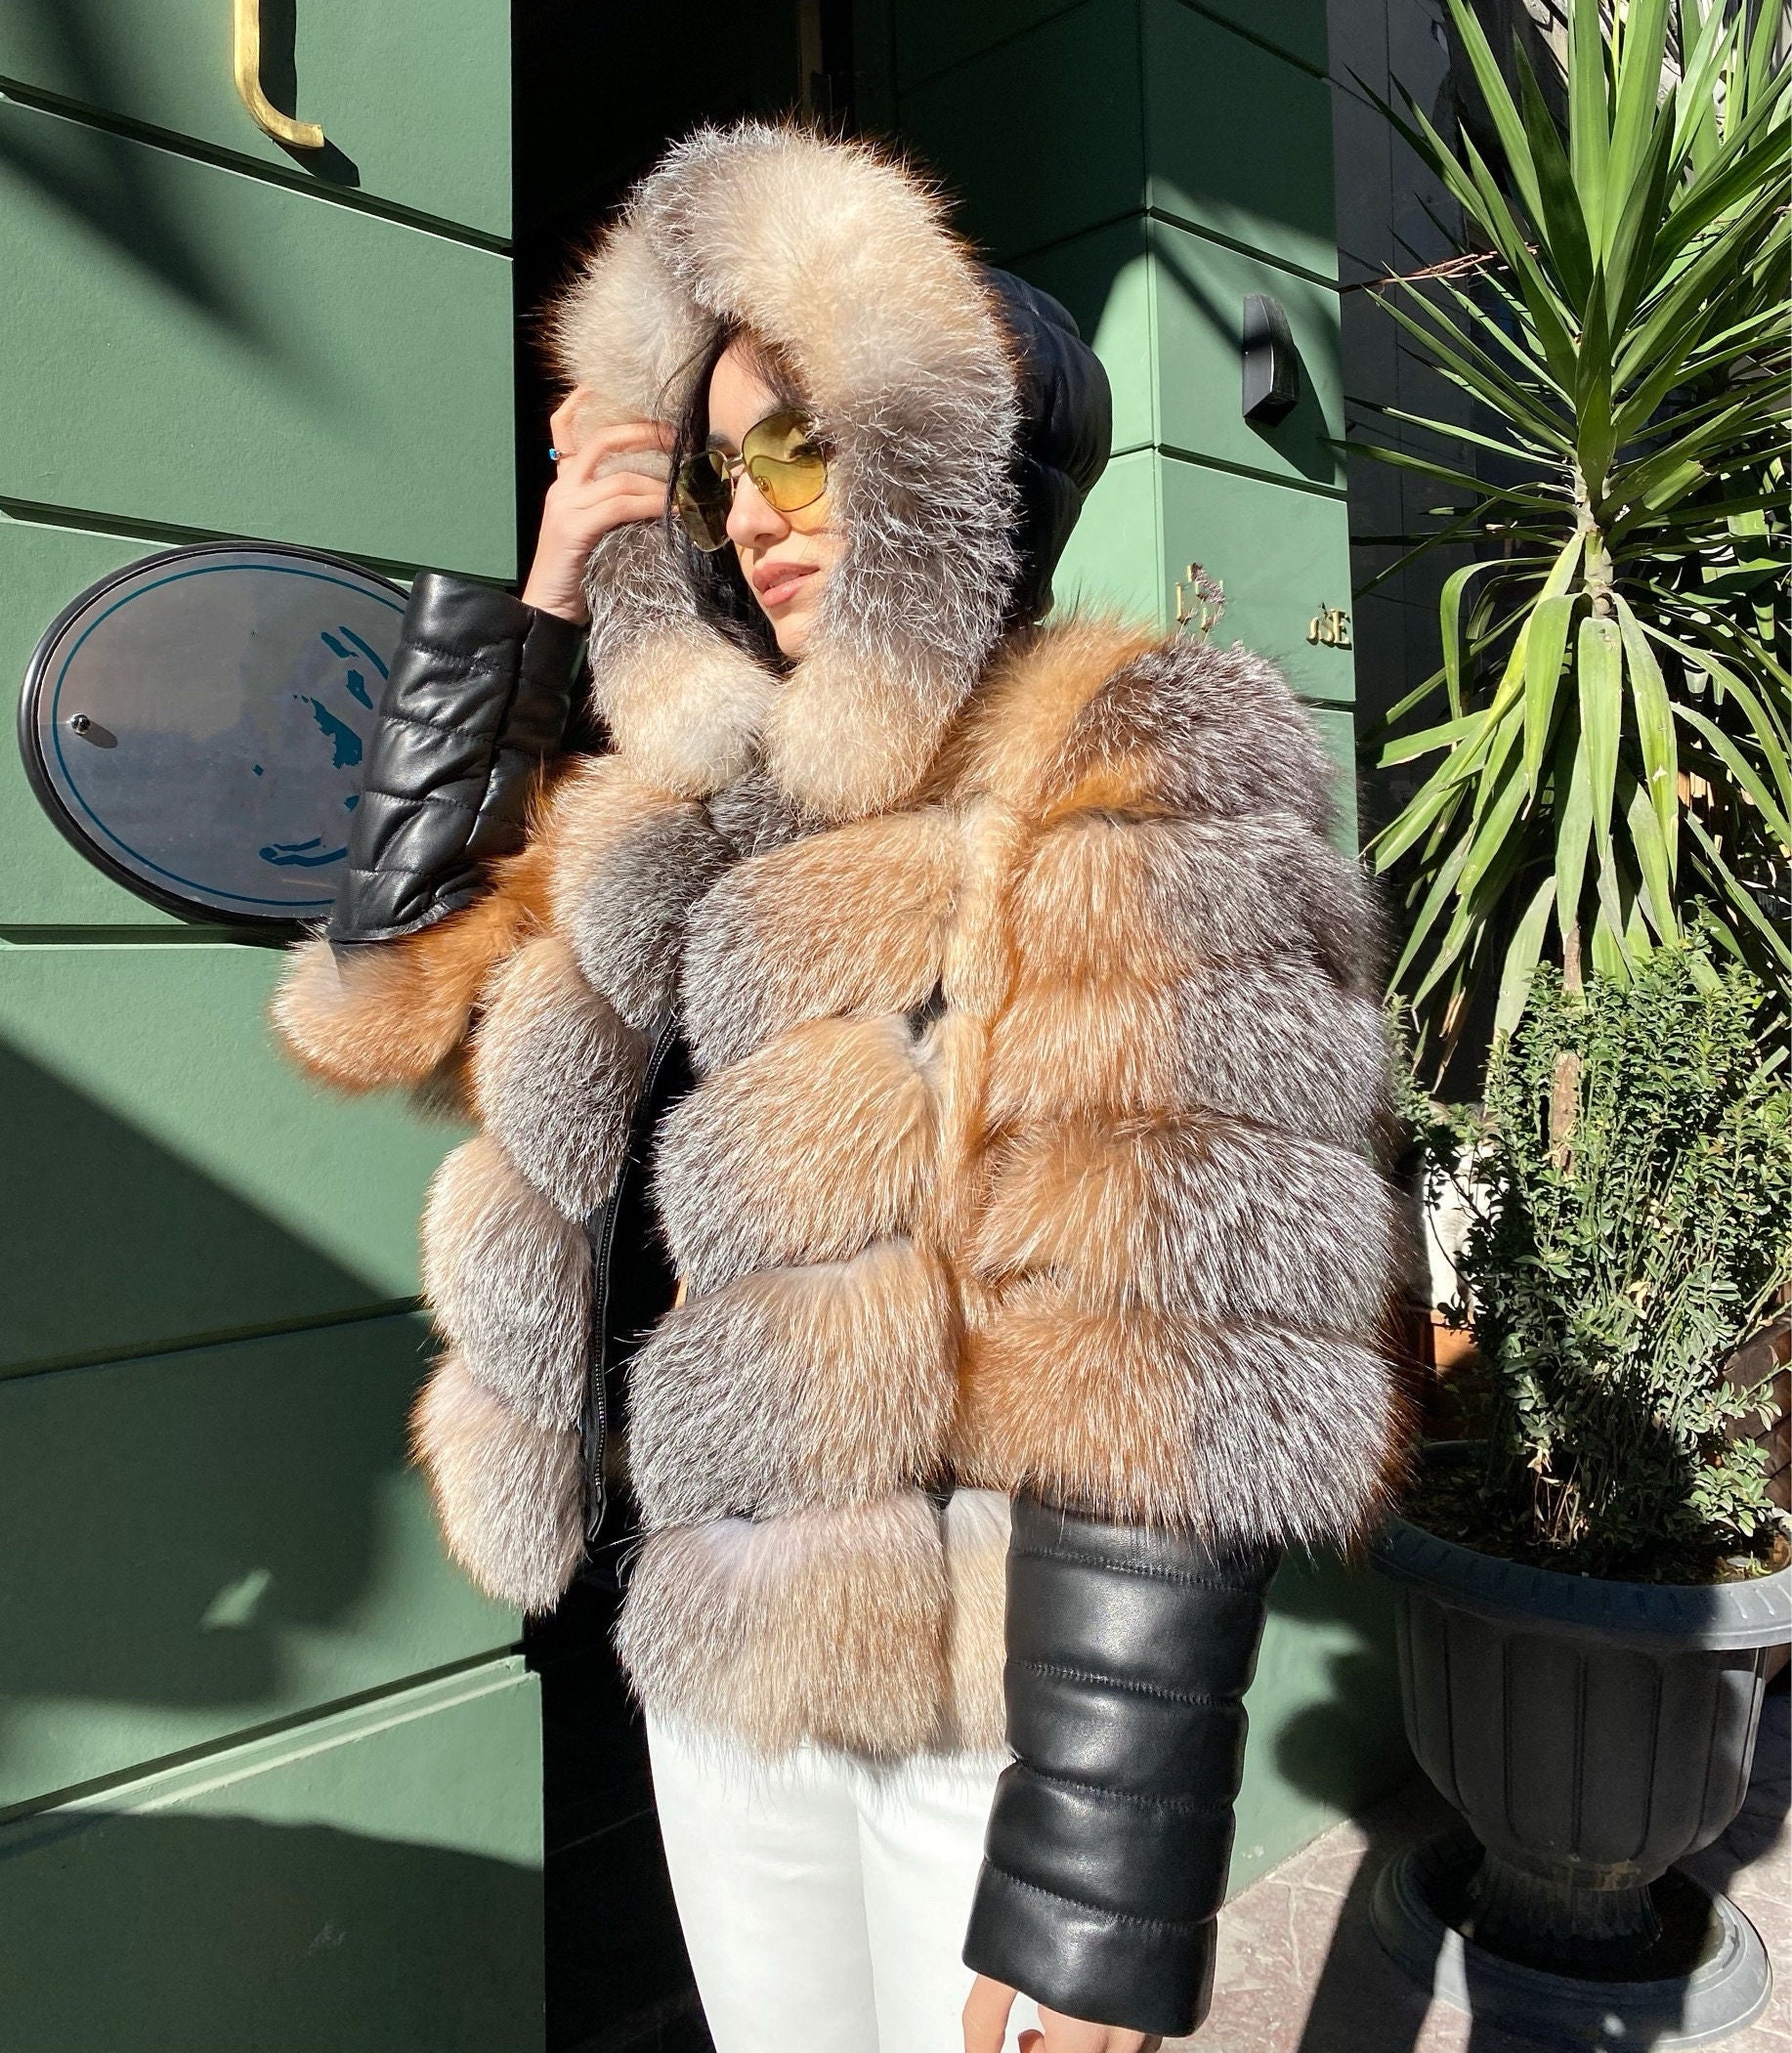 Damen Schaffell Ledermantel mit großer Echt fuchs Pelz kragen Jacke  pelzigen Winter flauschige Luxus warme Slim